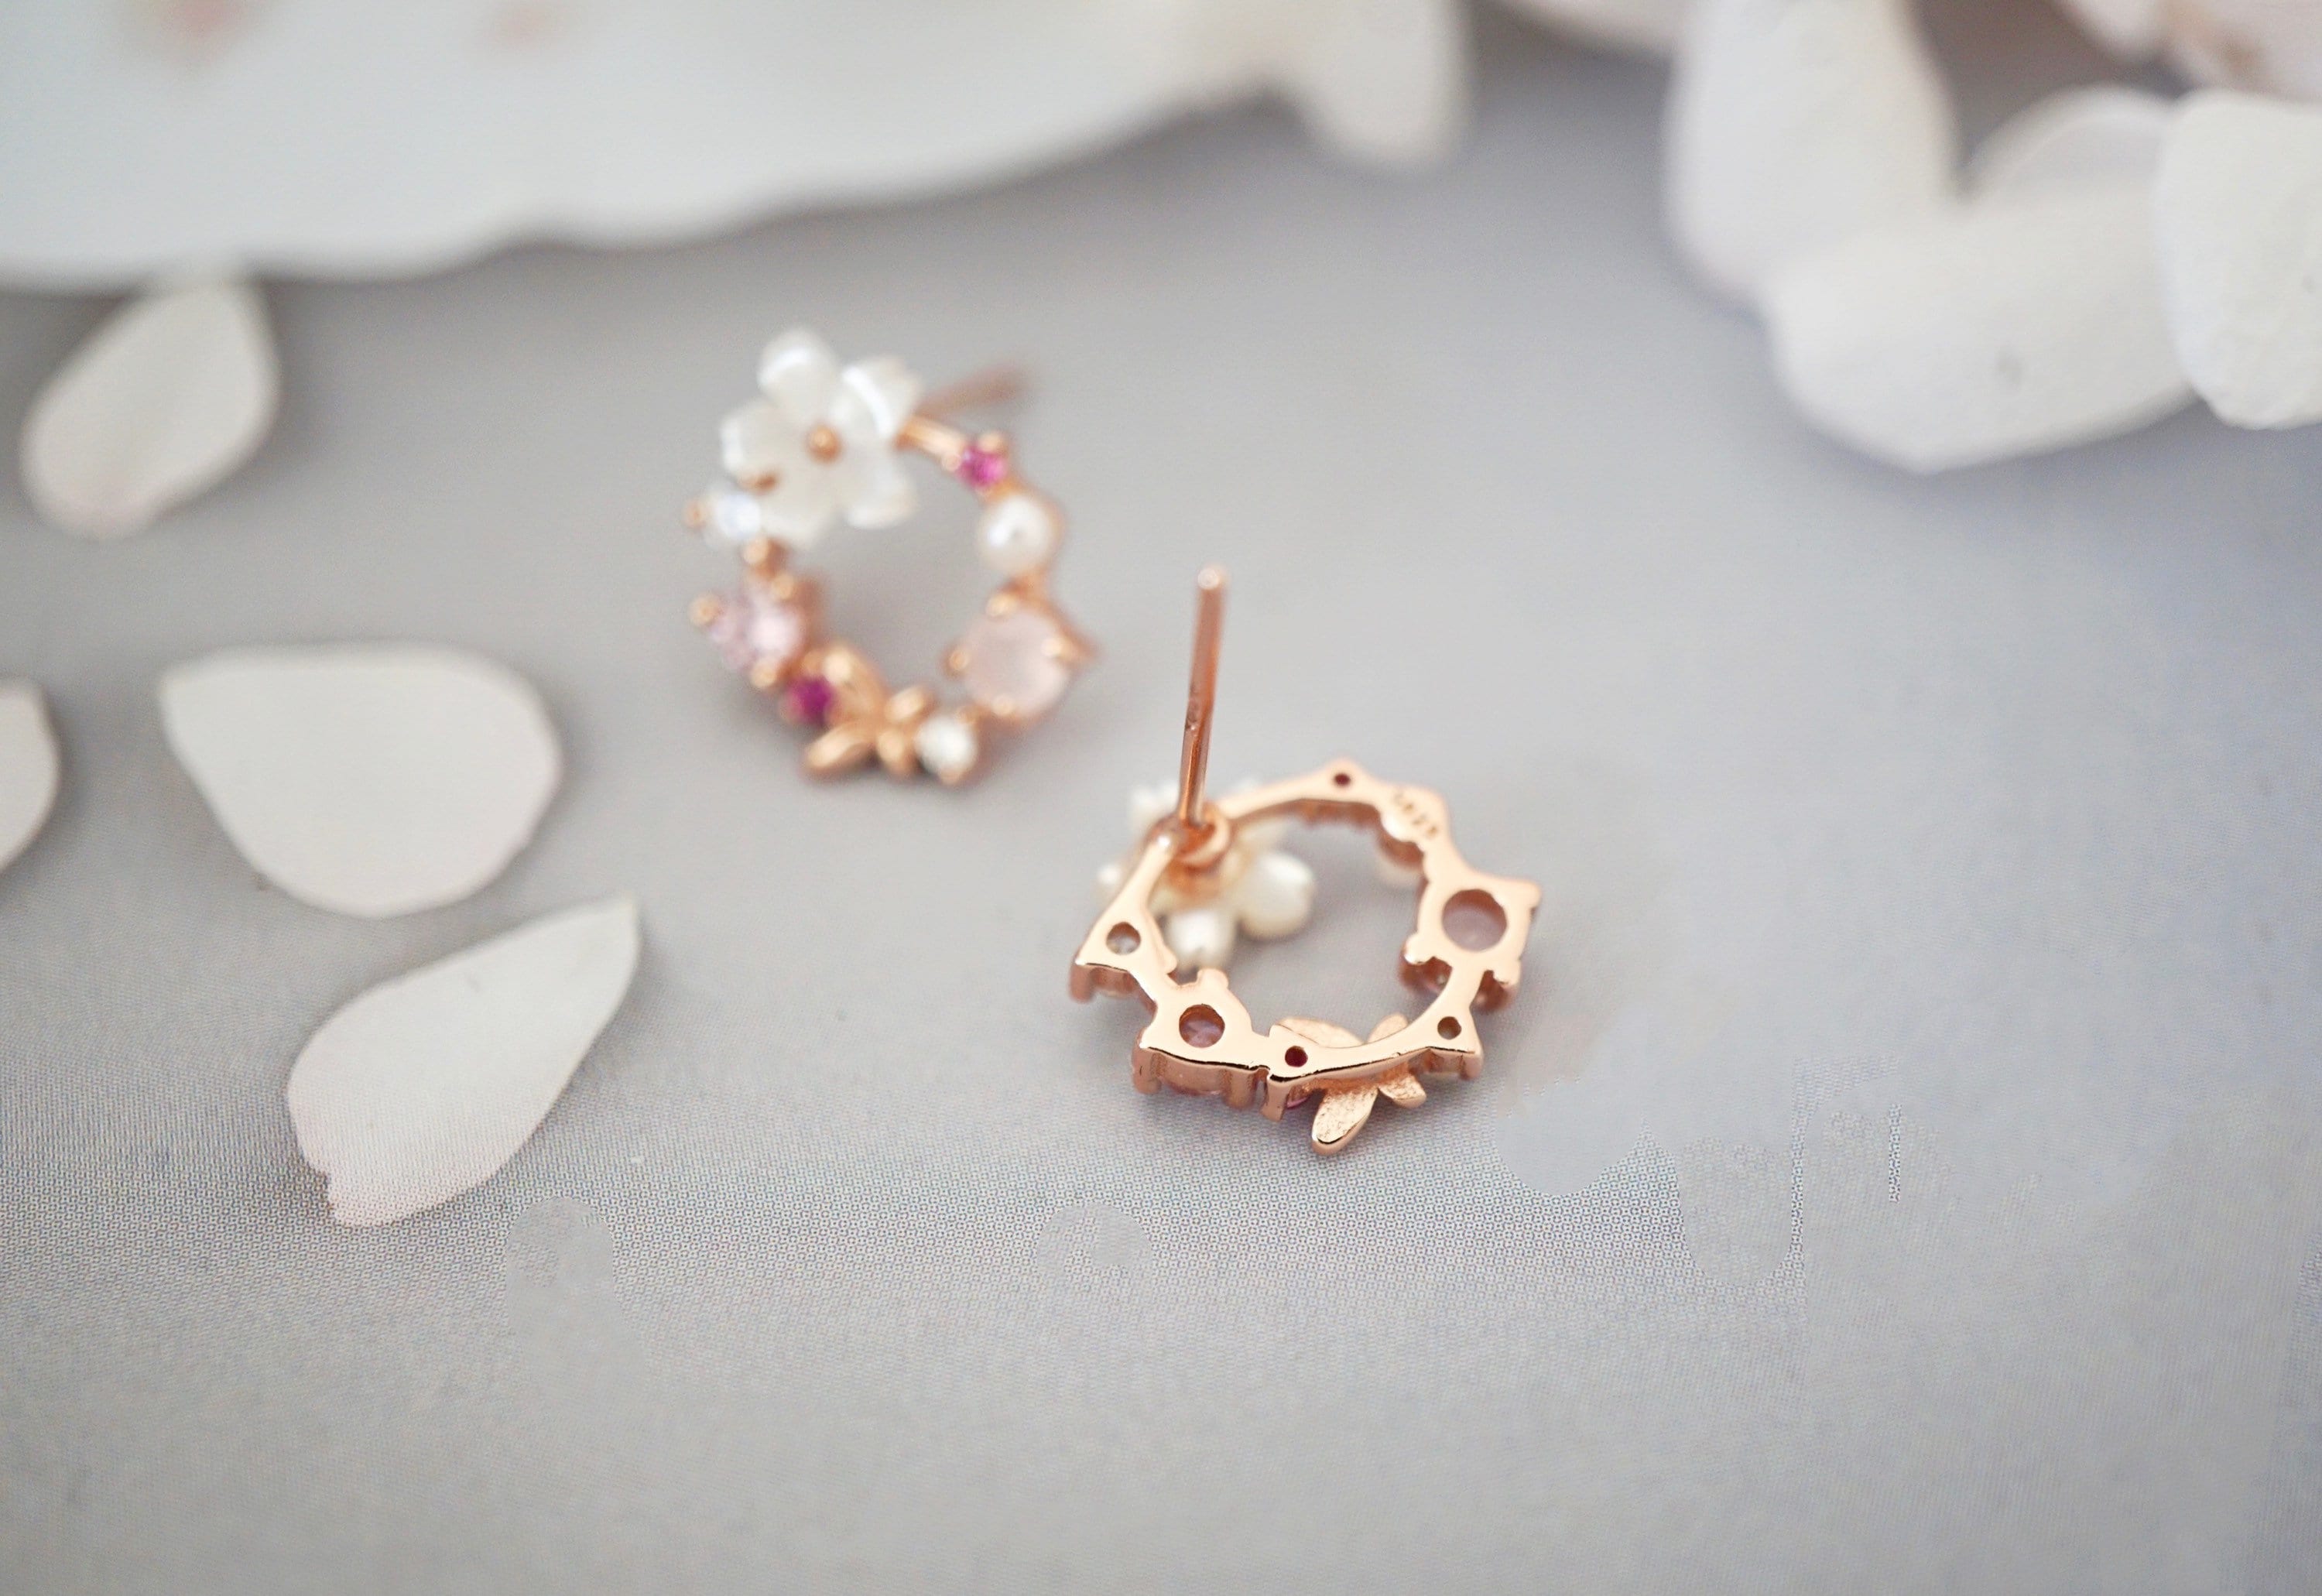 ❤️Buy 2 FREE SHIPPING❤️Tiny Rose Gold Wreath  Stud Earrings - 925 Silver Circle Natrual Mother of Pearl Flower Earrings, Crystal Wedding Earrings